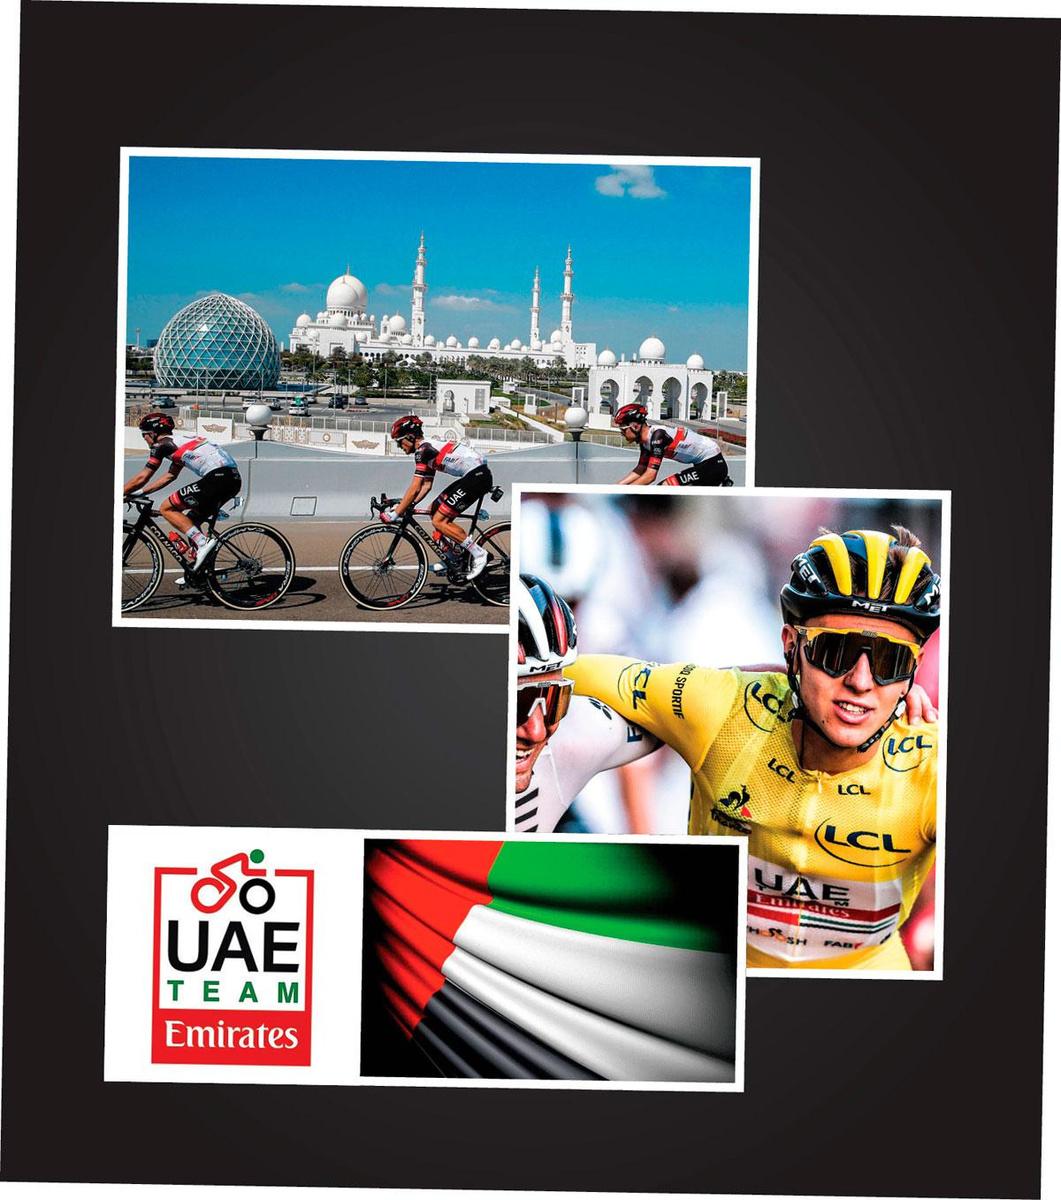 Team UAE Emirates Won vorig jaar de Tour de France met Tadej Pogacar.